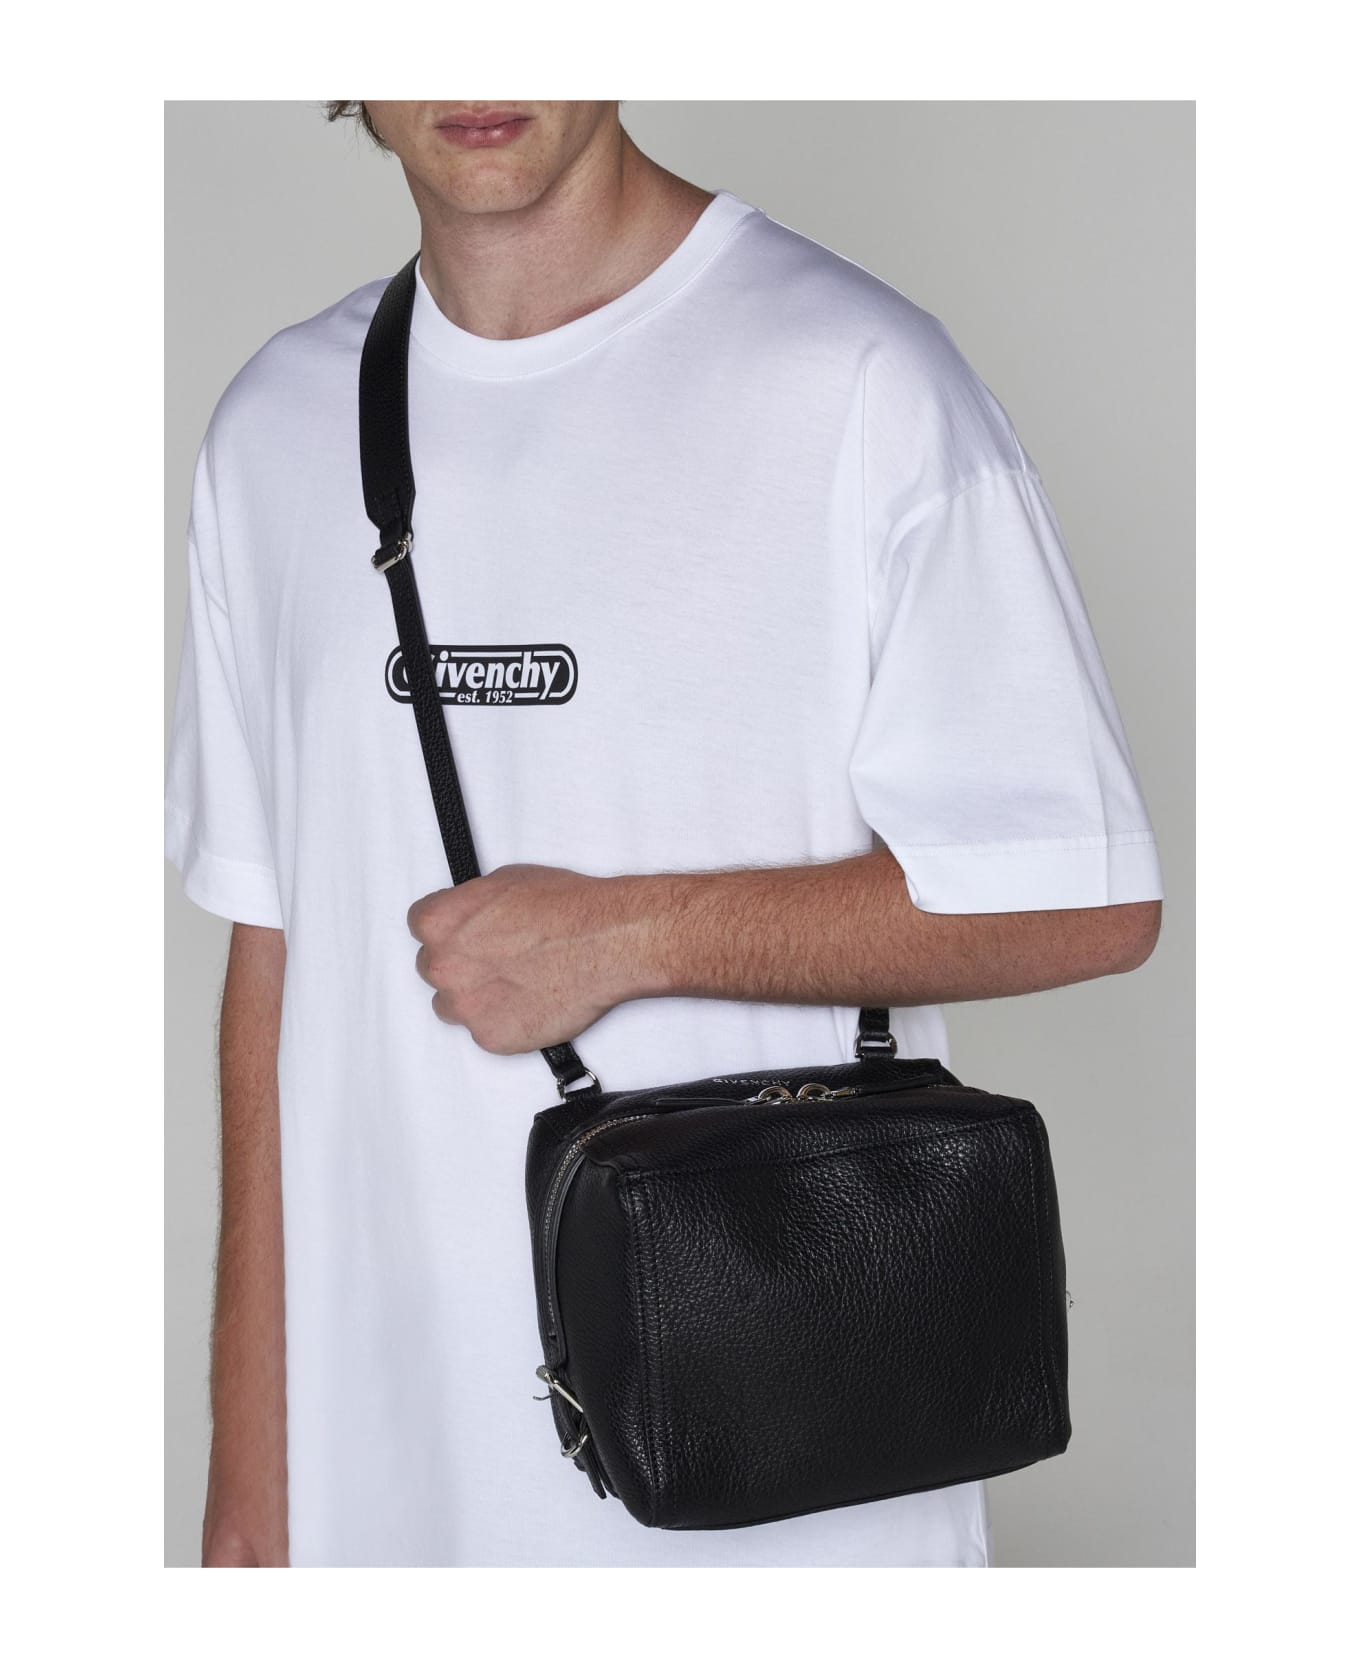 Givenchy Pandora Leather Small Bag - Black